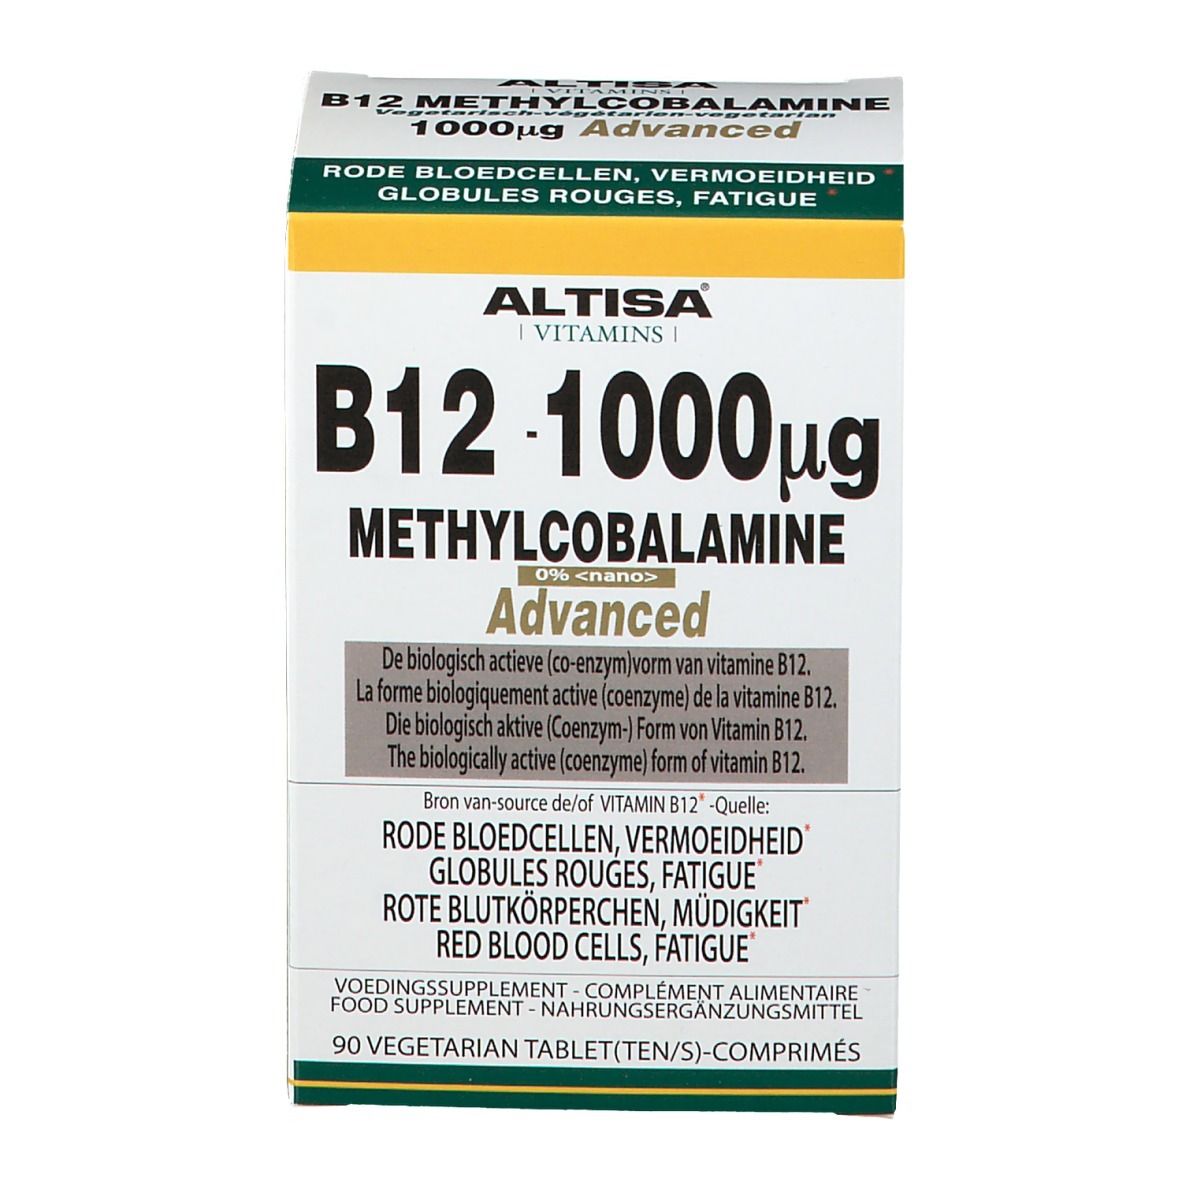 Altisa® Vitamine B12 1000mcg Methylcobalamine